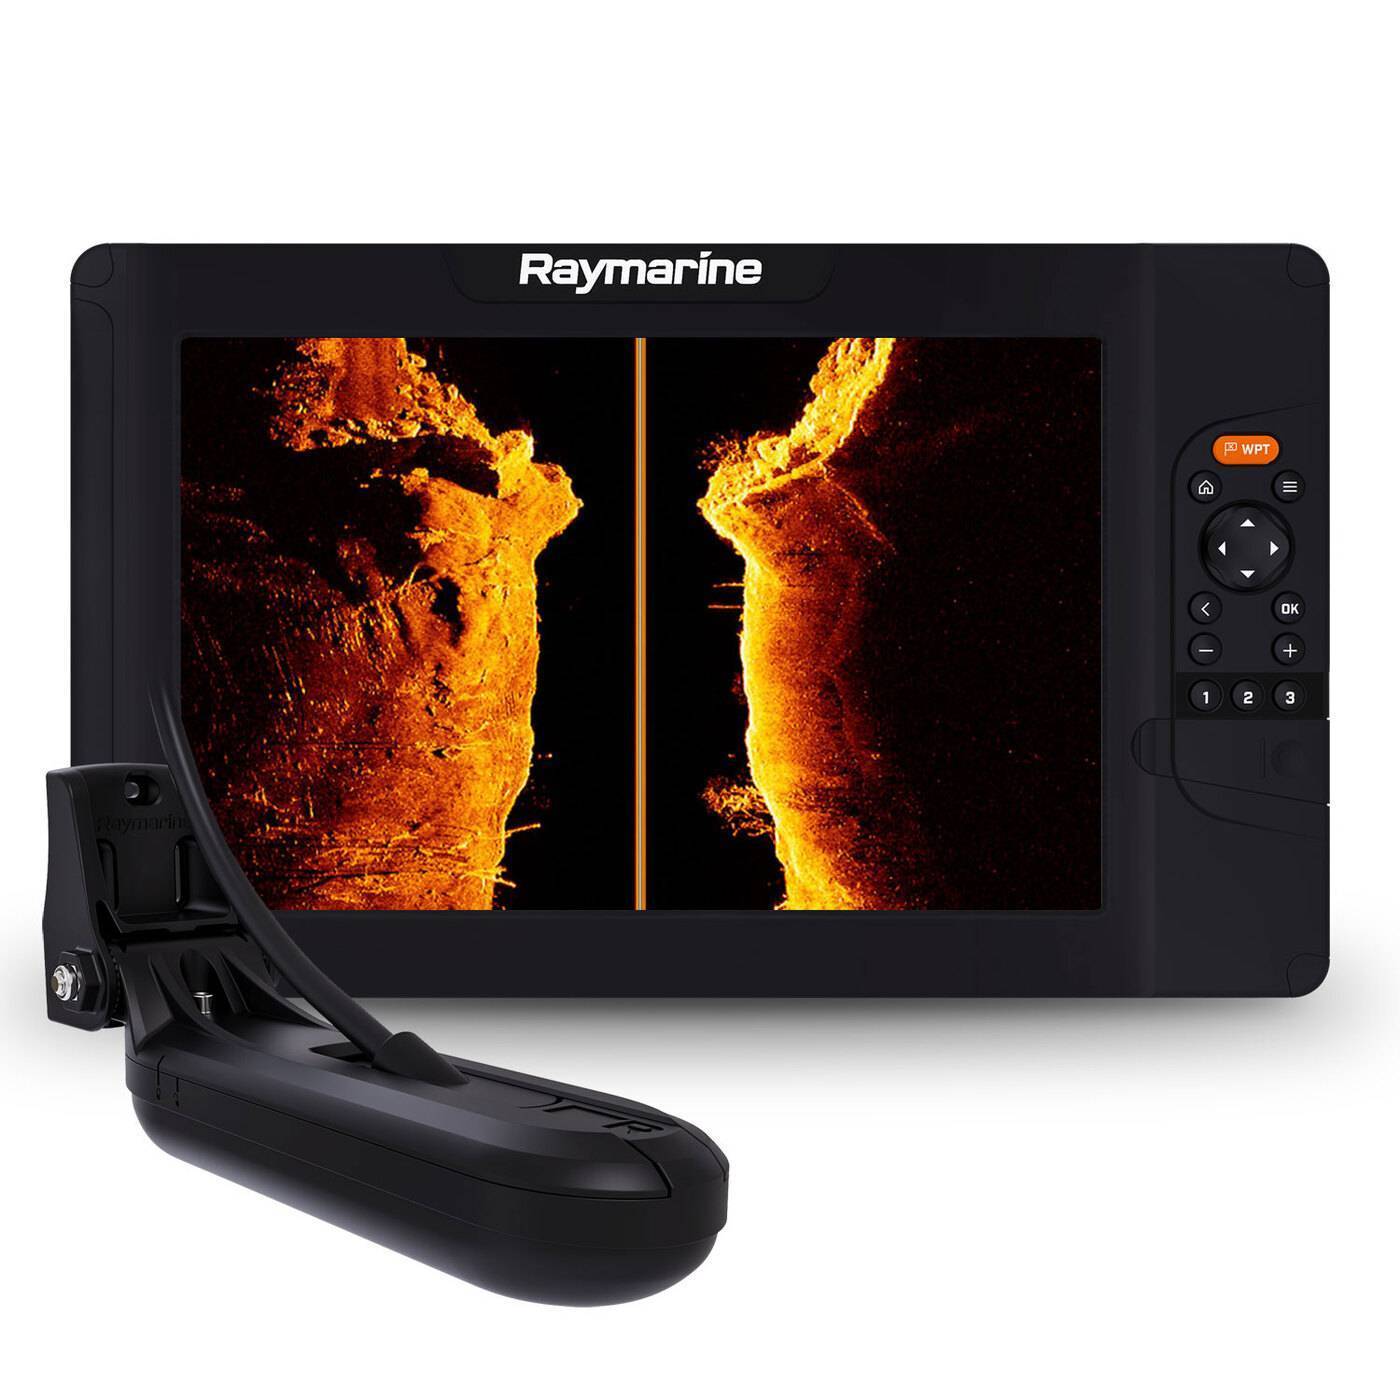 Raymarine | marine electronics by raymarine